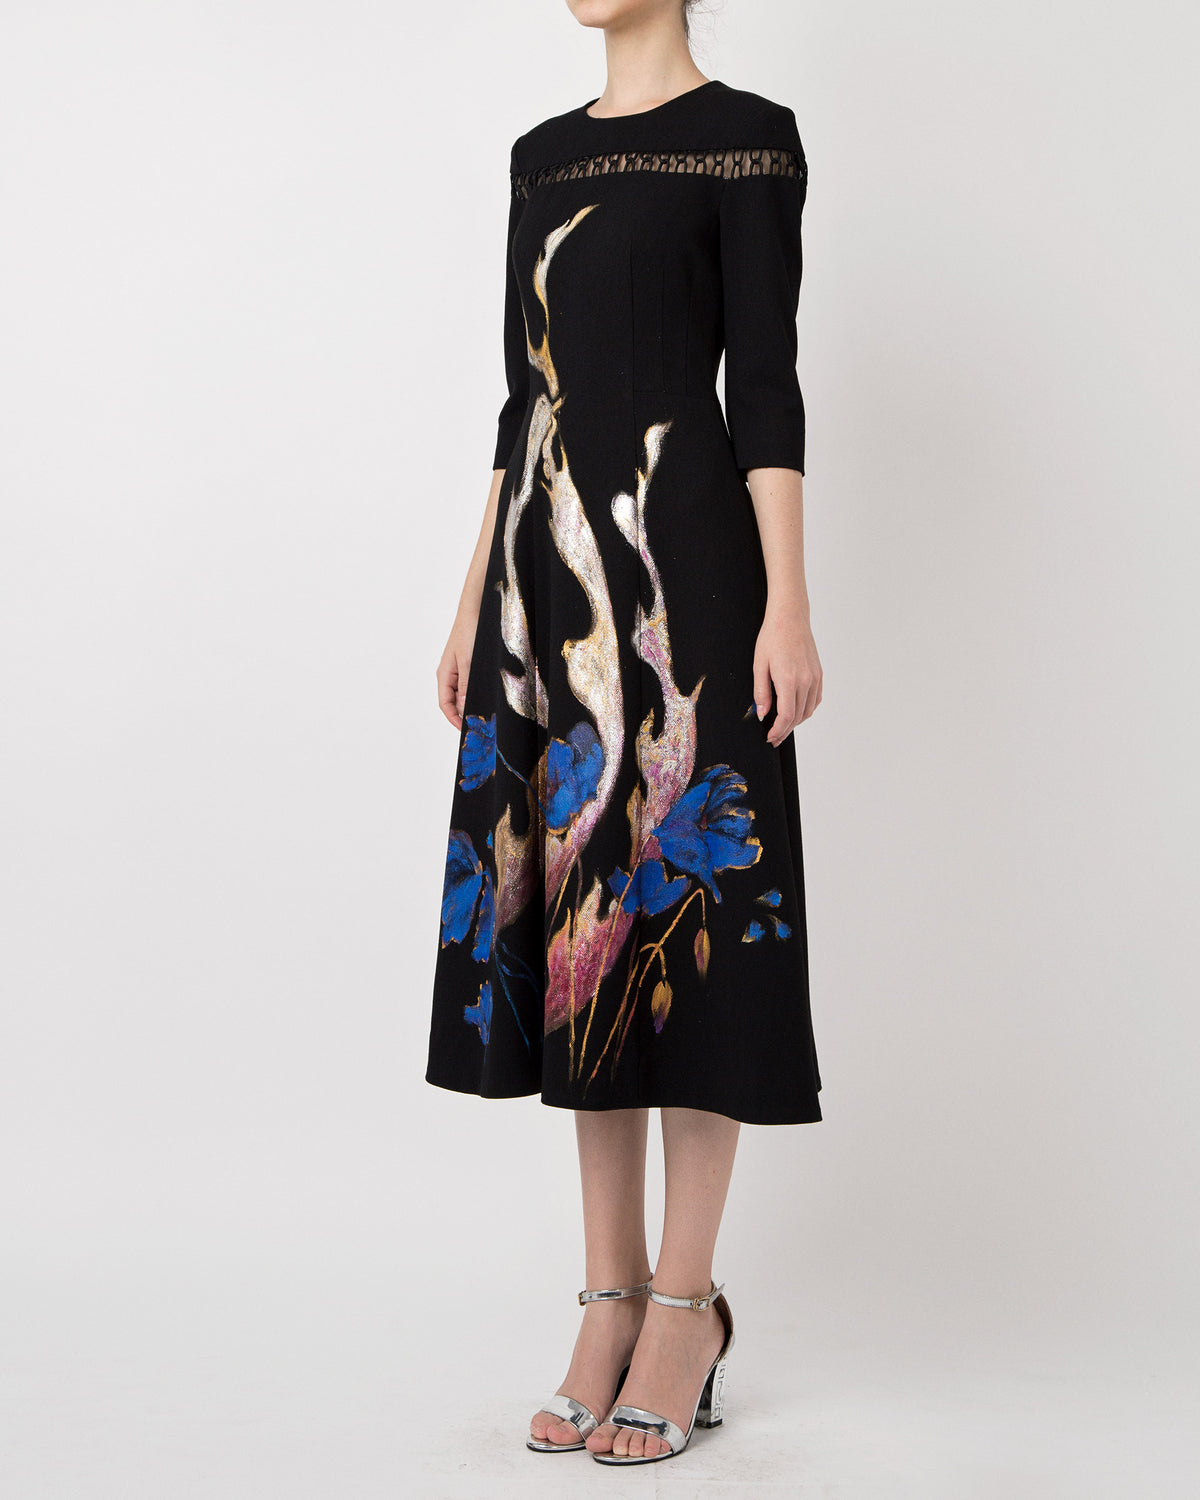 Phoenix in poppy-painted  mid-length Sleeve Black Skater Dress.